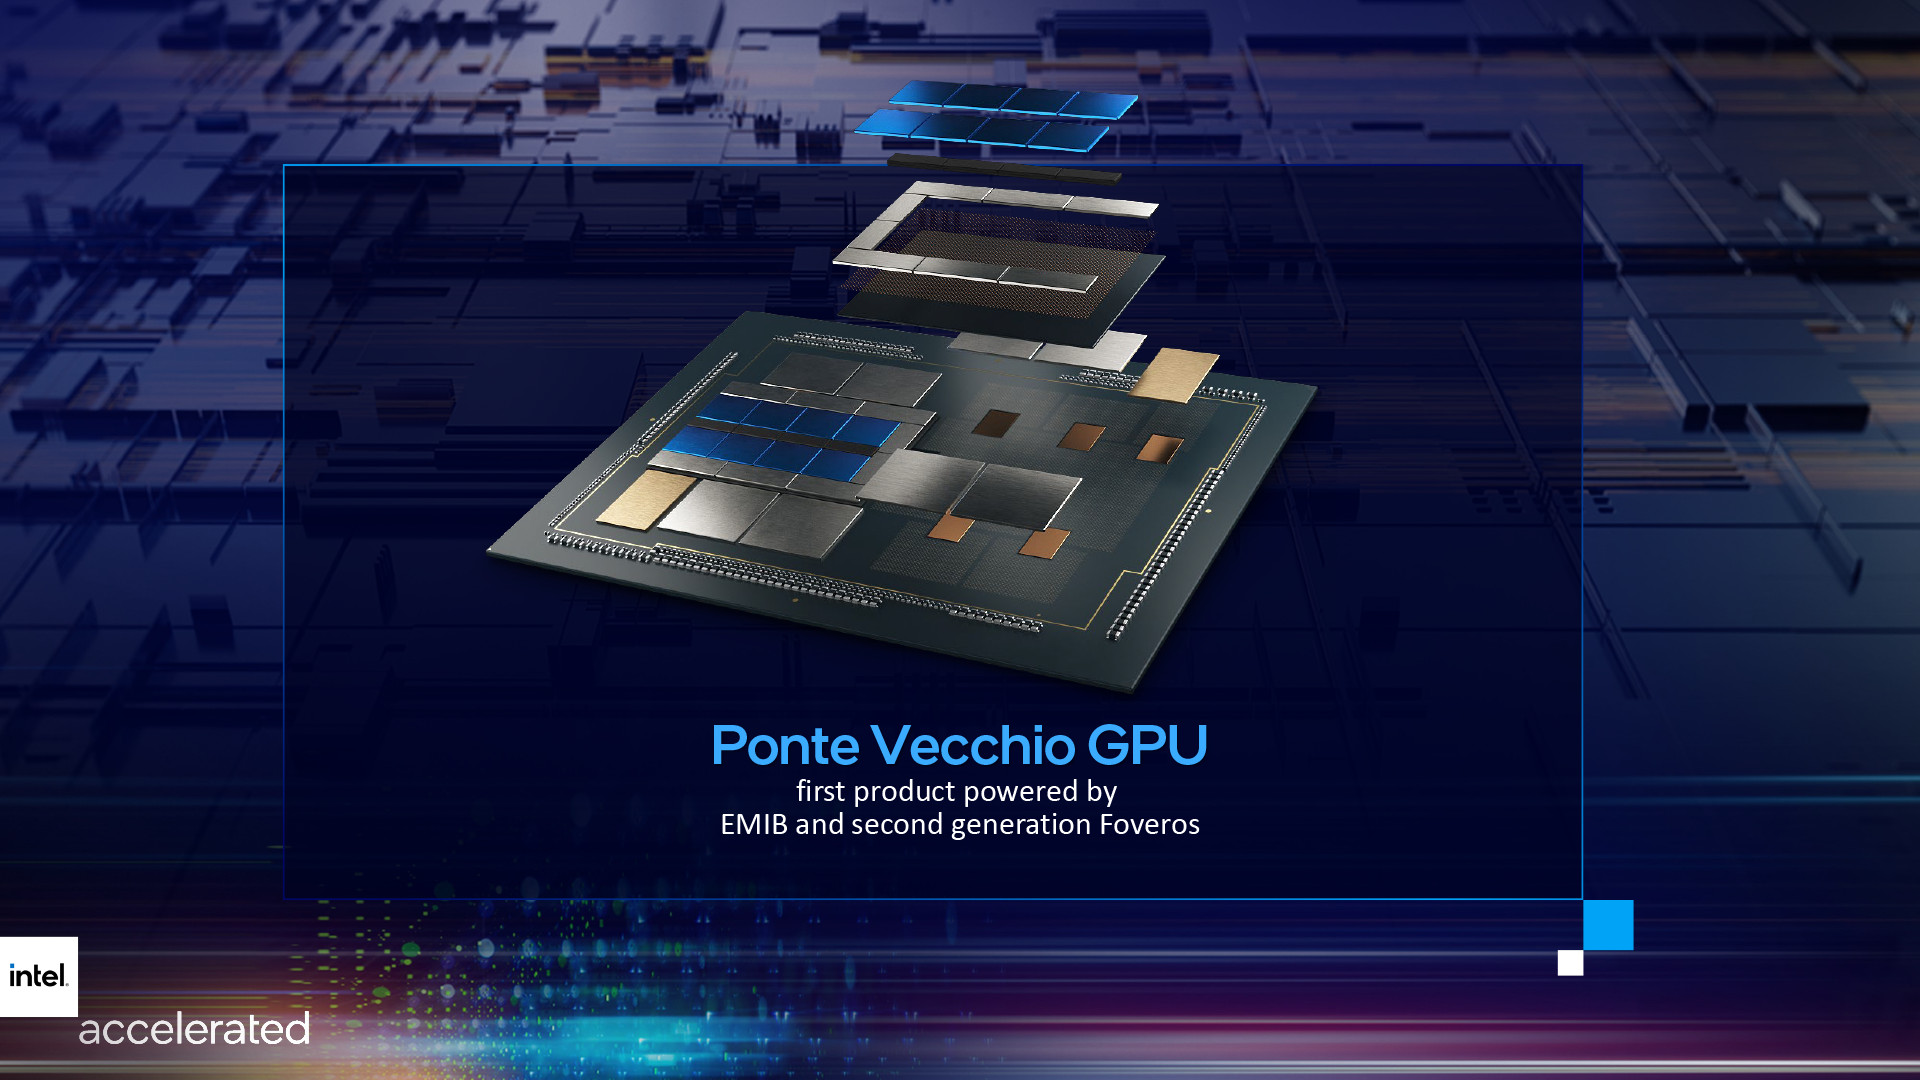 Intel Ponte Vecchio GPU with EMIB and 2nd Gen Foveros